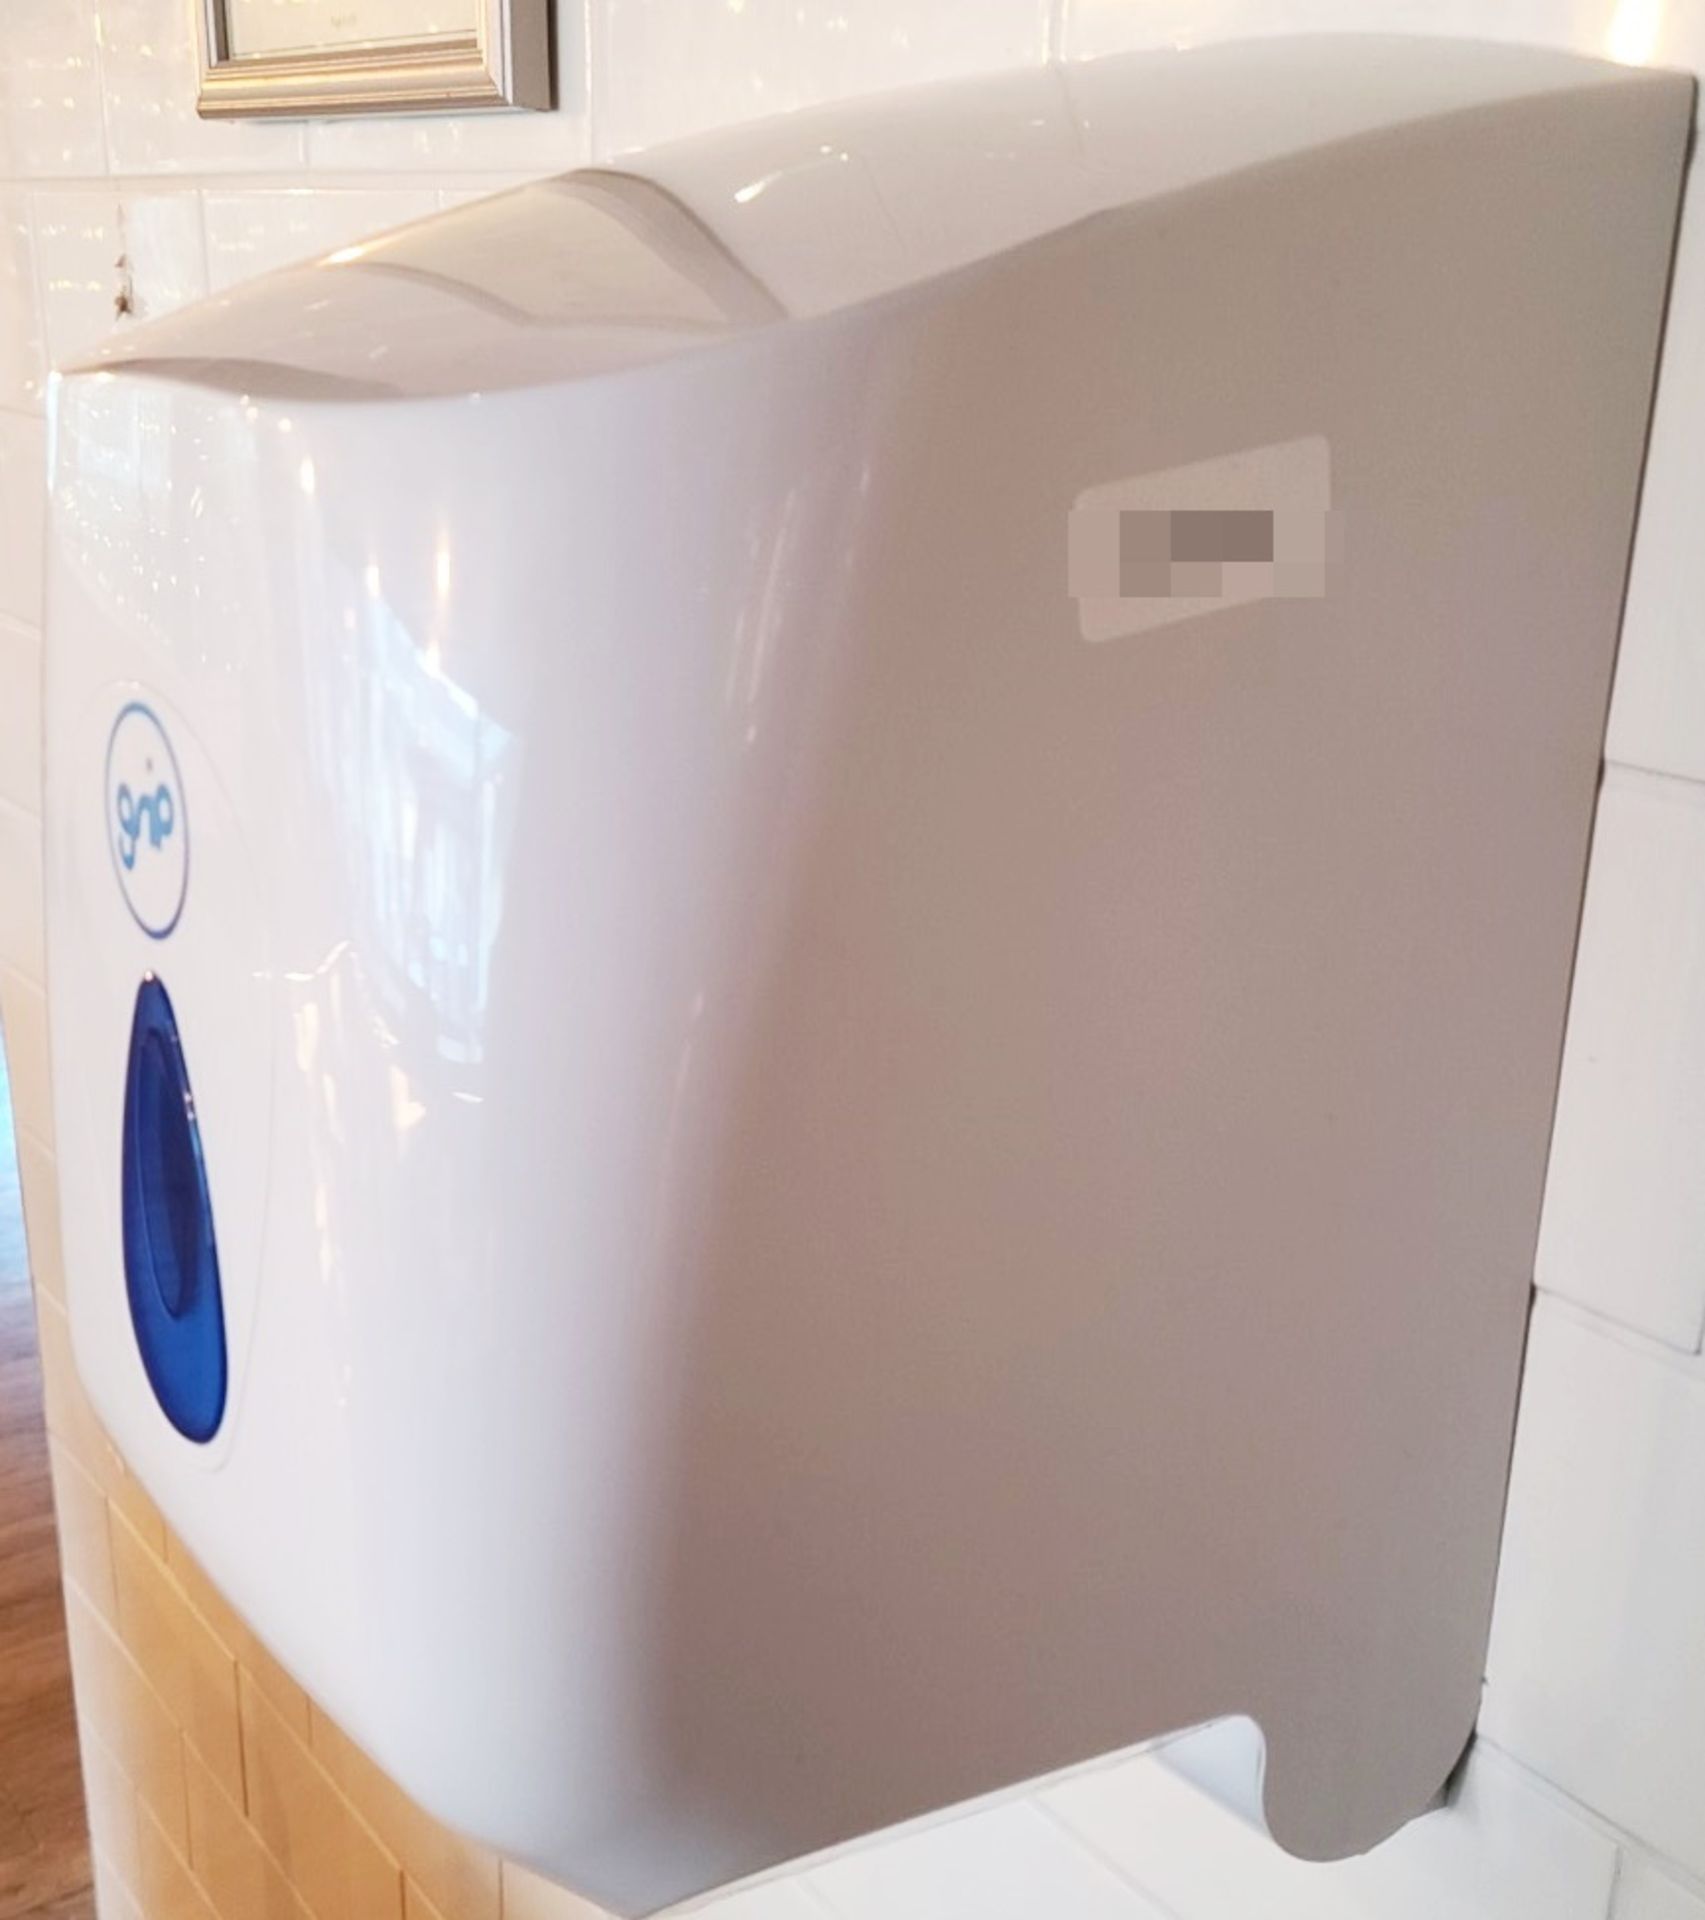 1 x GRIP Wall Mounted Lockable Centrefold Hand Towel Dispenser And 900ml Hand Sanitizer Dispenser - Image 5 of 5